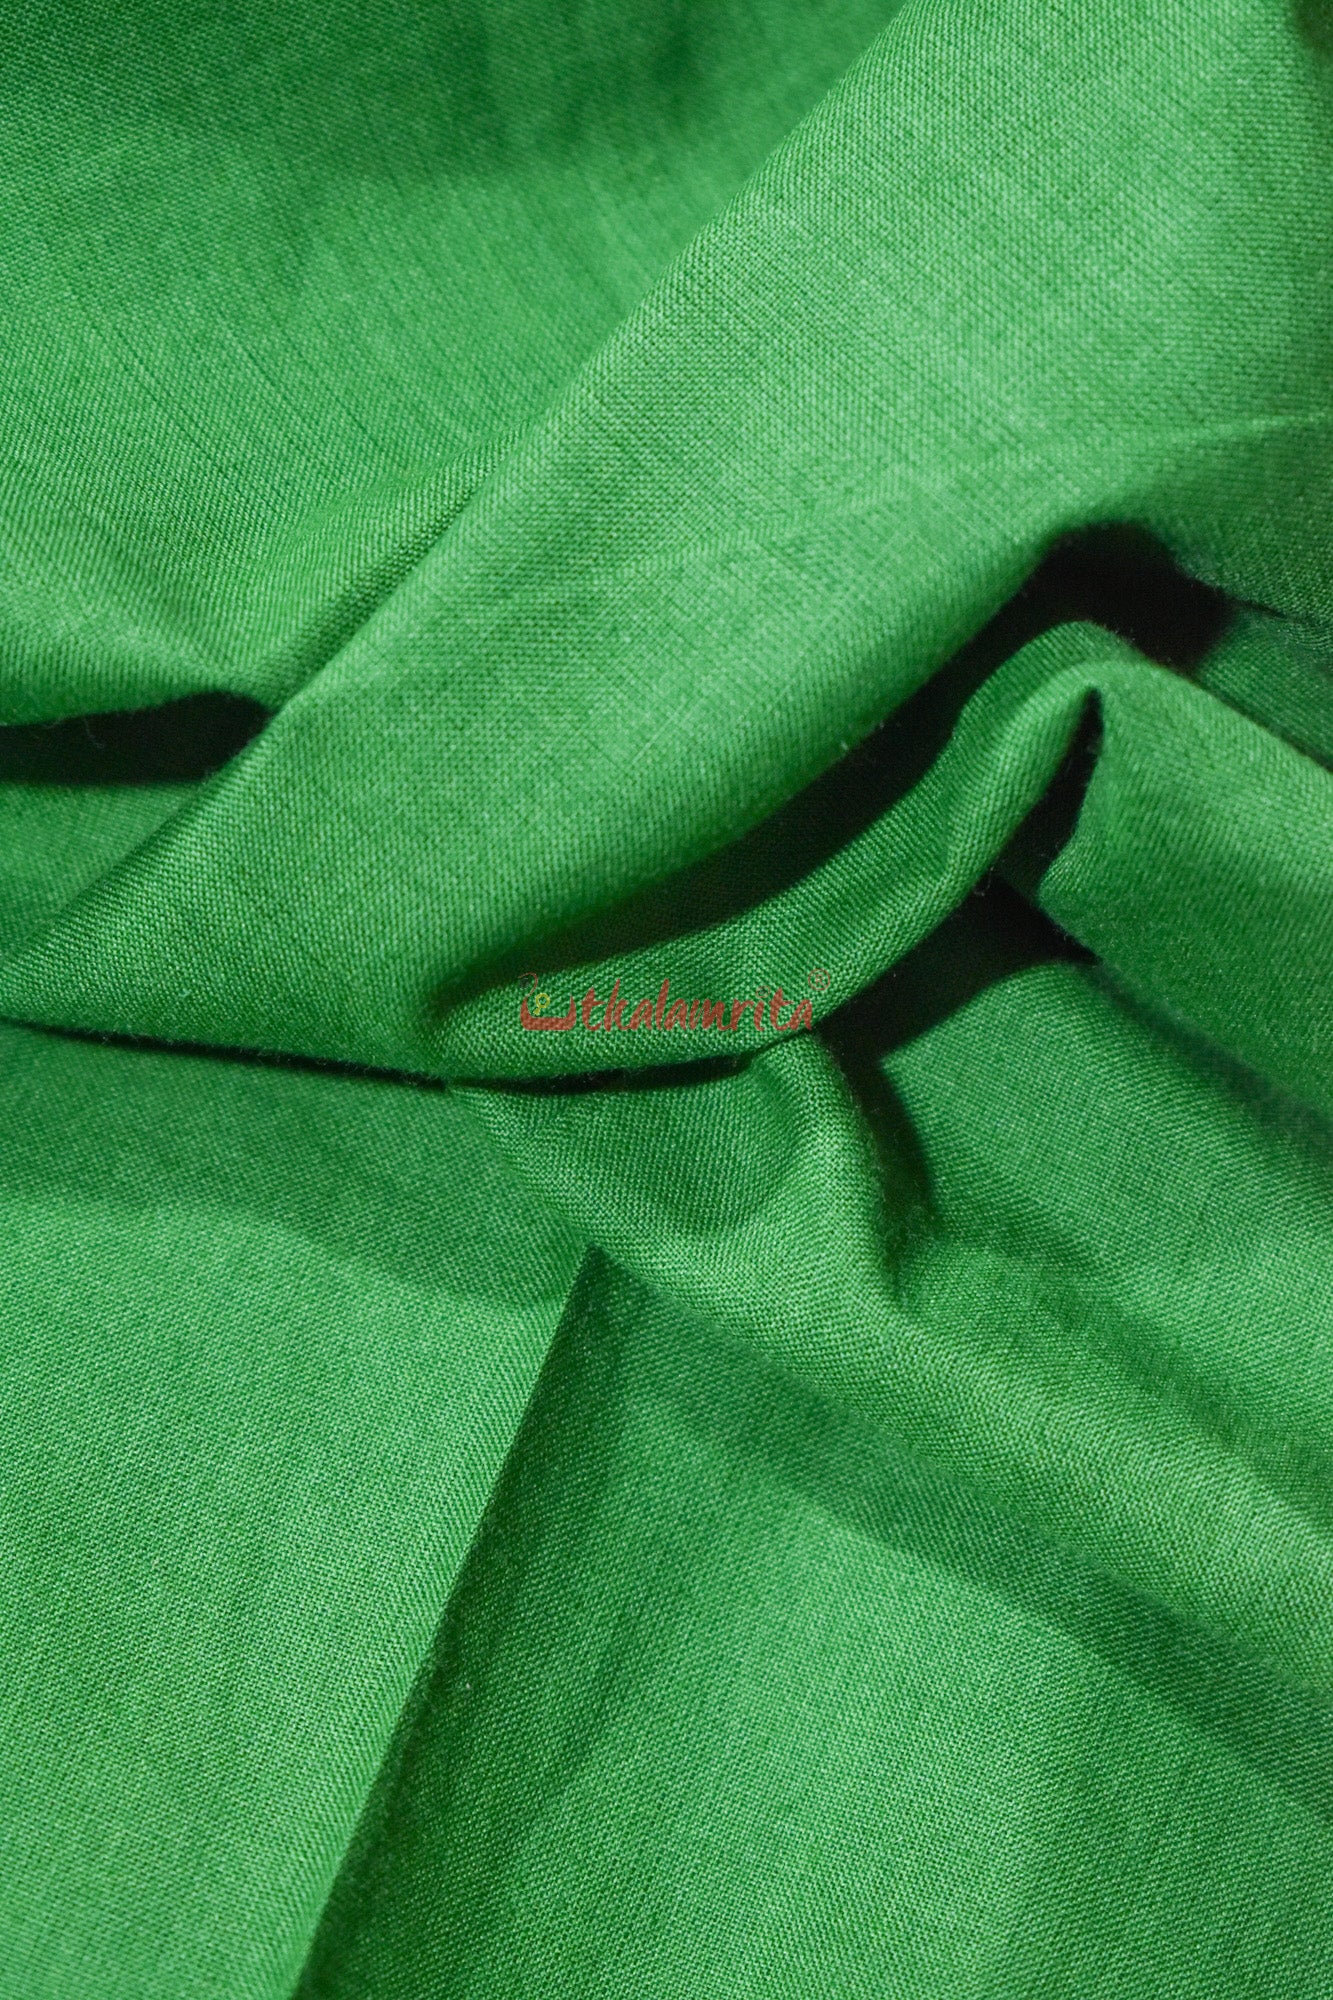 Green Blouse (Fabric)